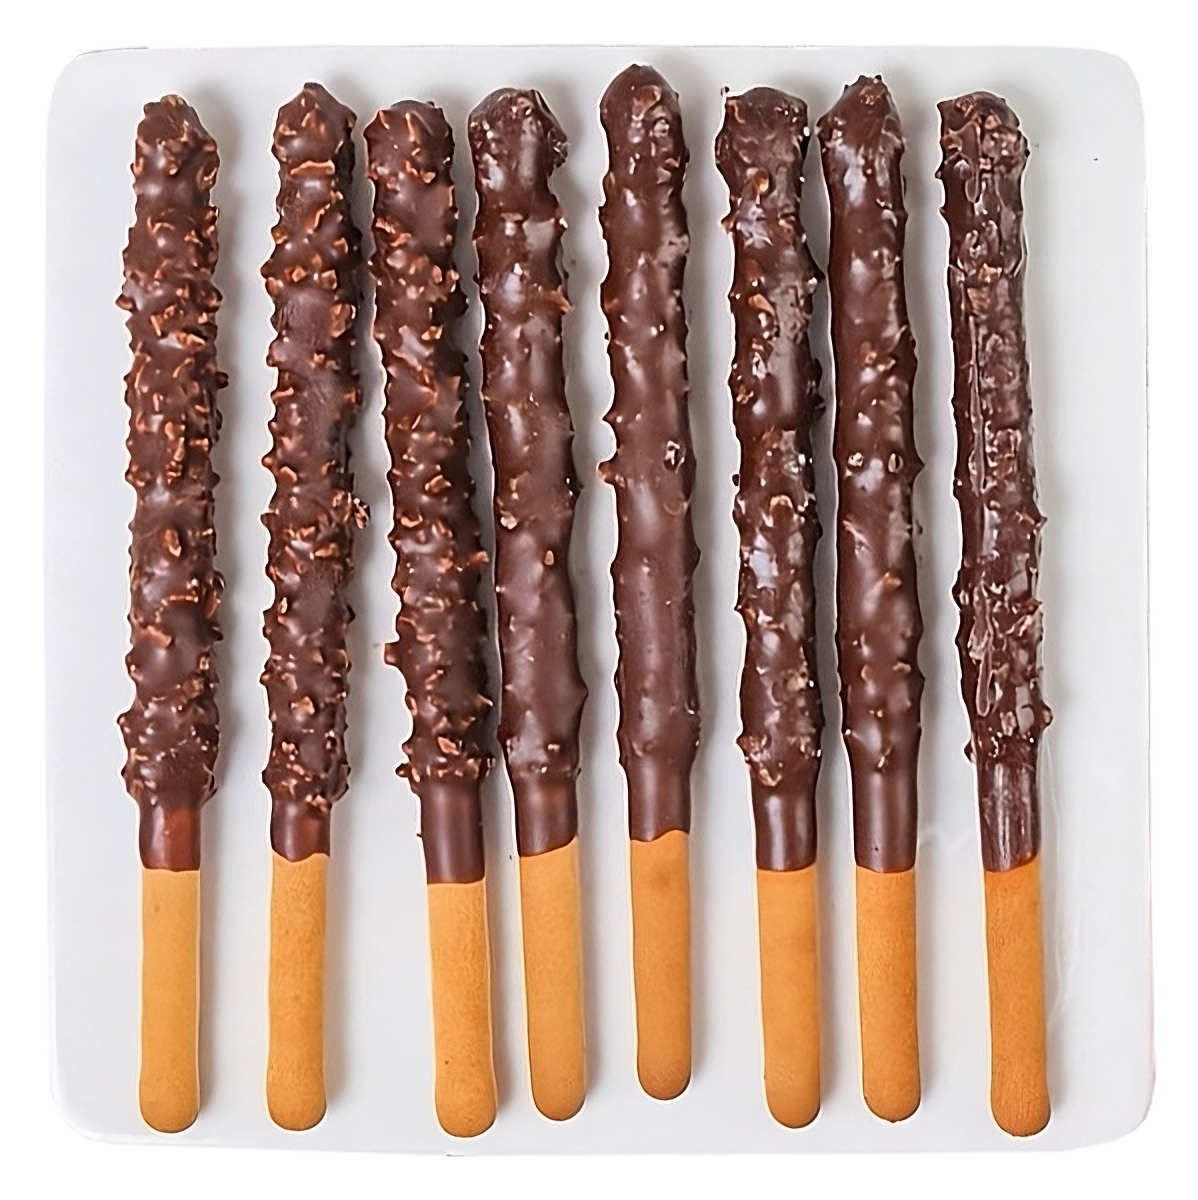 Three huge crackling chocolate sticks from Korea